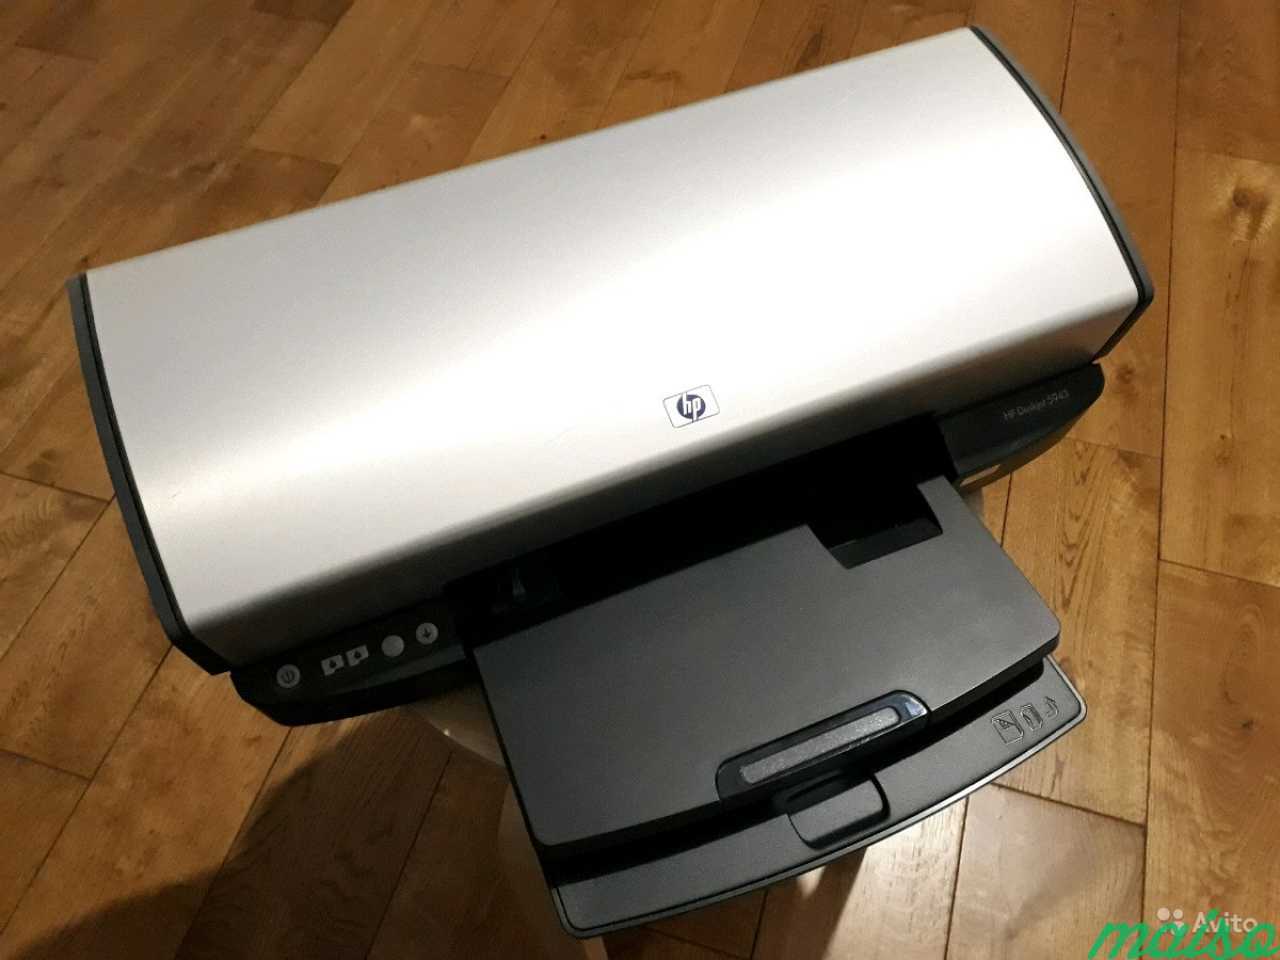 Принтер HP DeskJet 5943 в Санкт-Петербурге. Фото 1